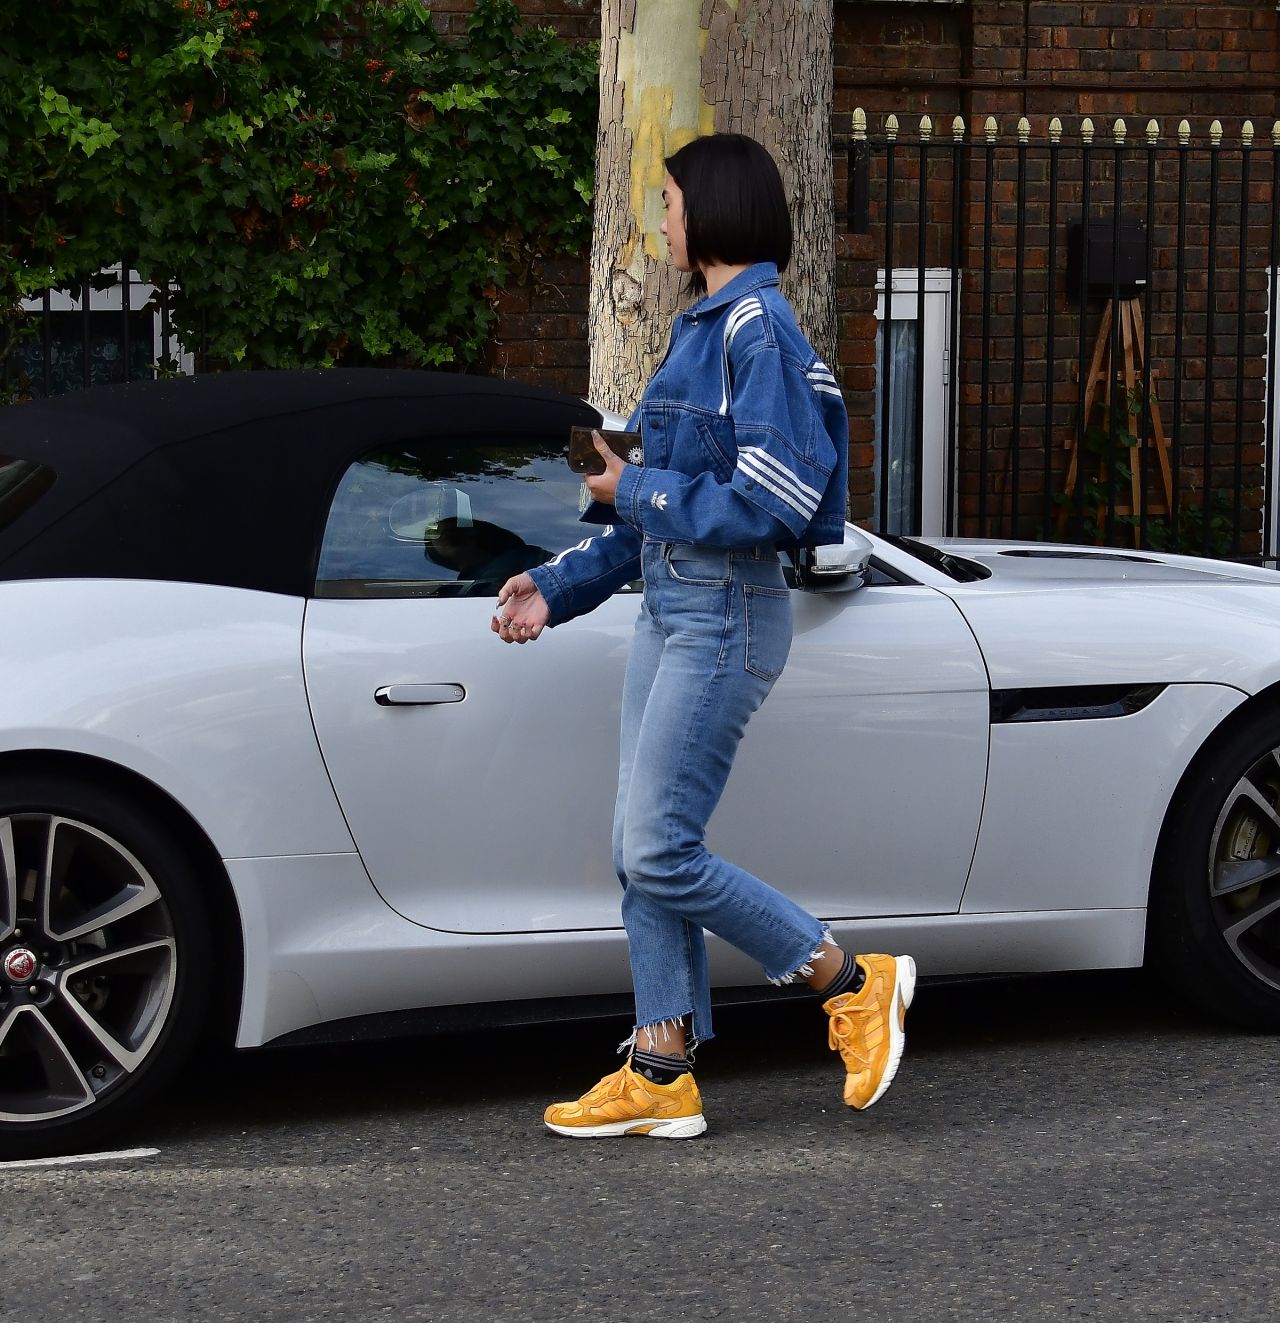 dua-lipa-booty-in-jeans-getting-into-her-sports-car-in-london-08-30-2018-4.jpg